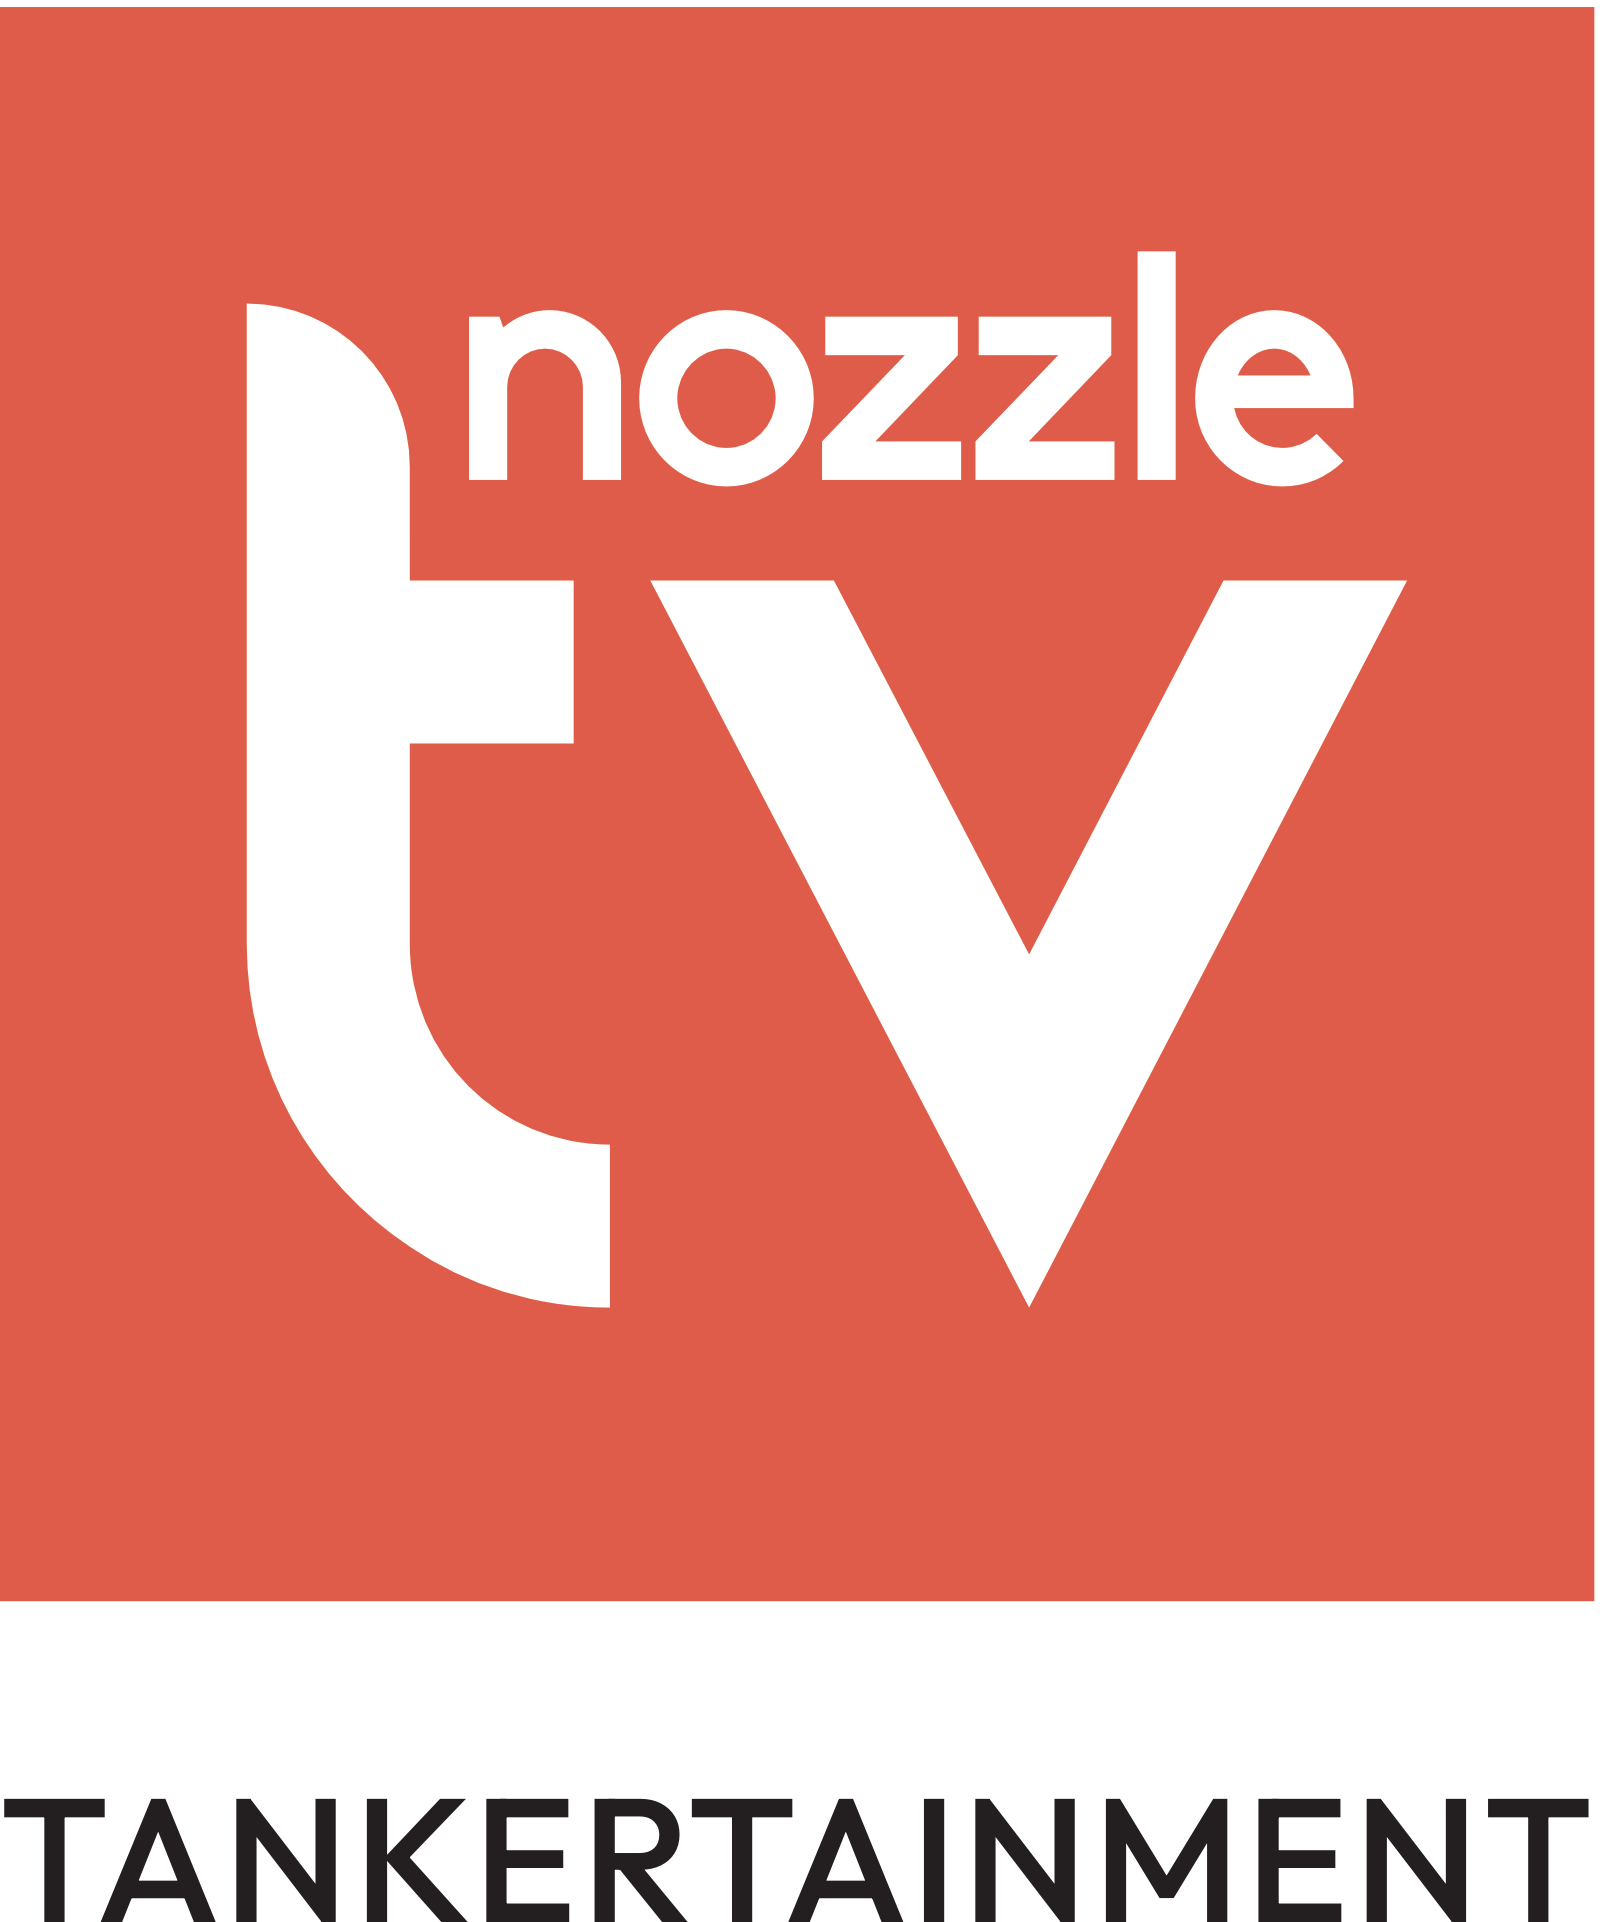 NozzleTV Tankertainment